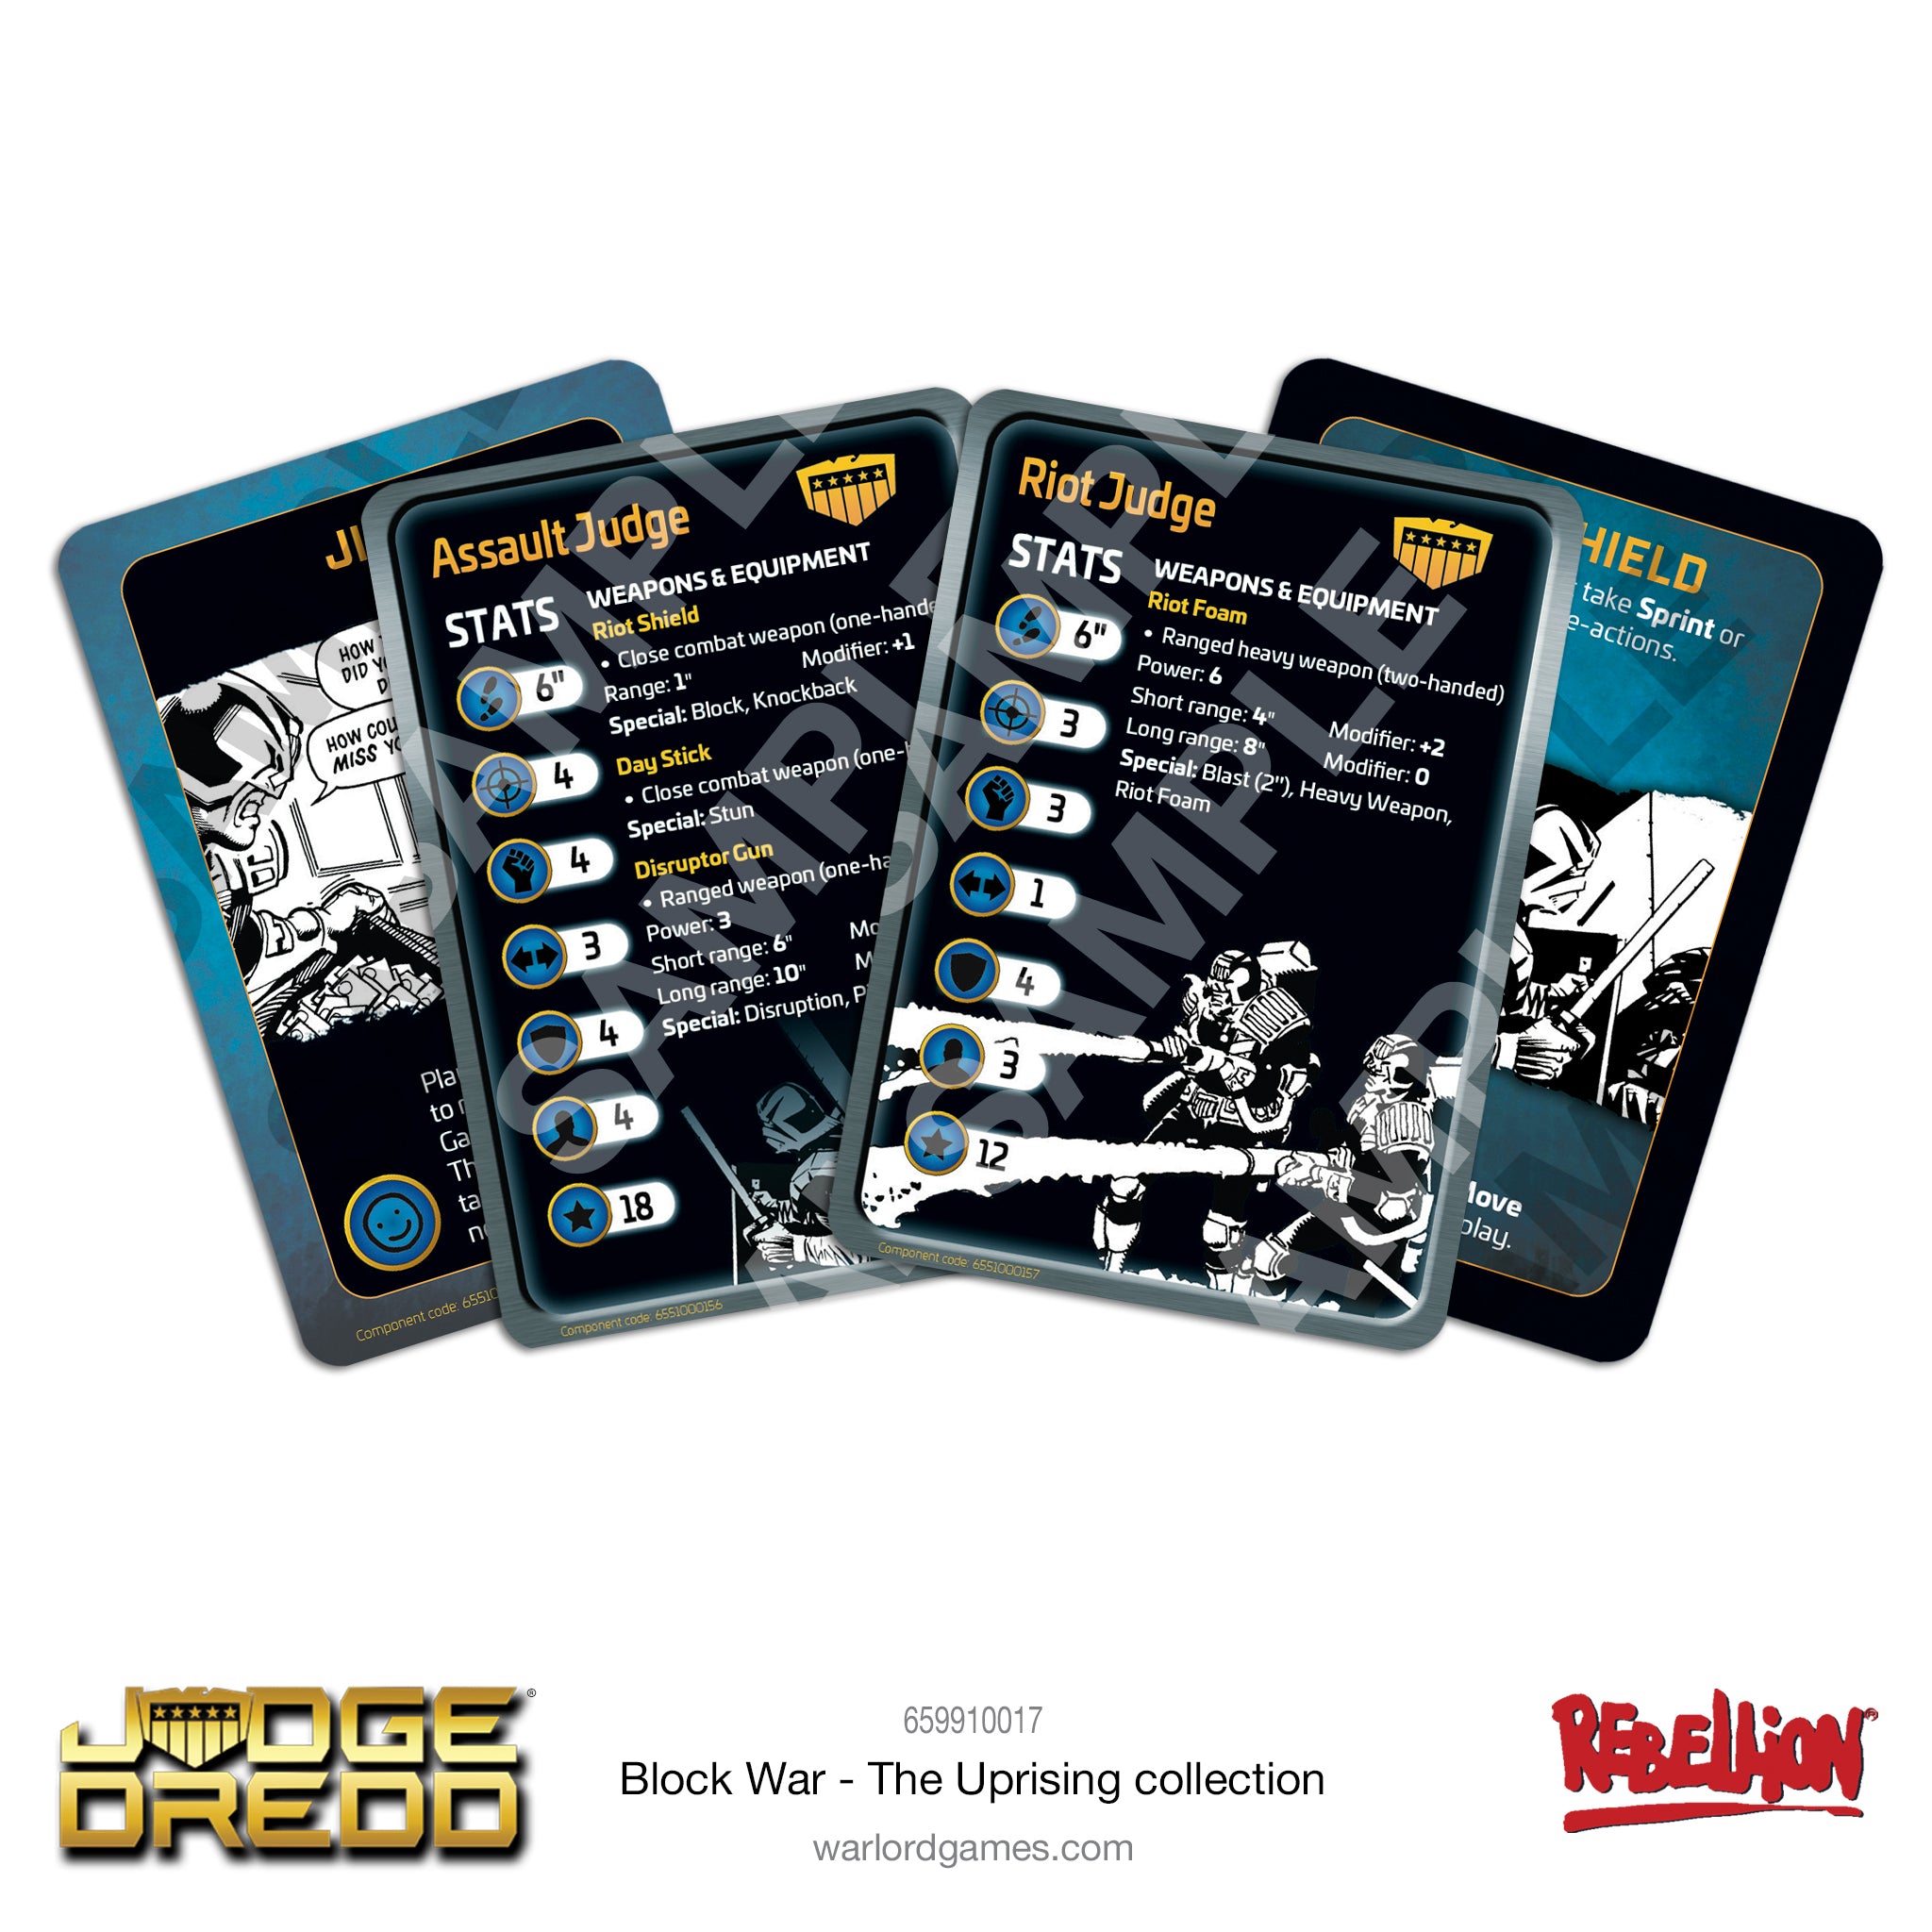 Judge Dredd: Block War - The Uprising Collection